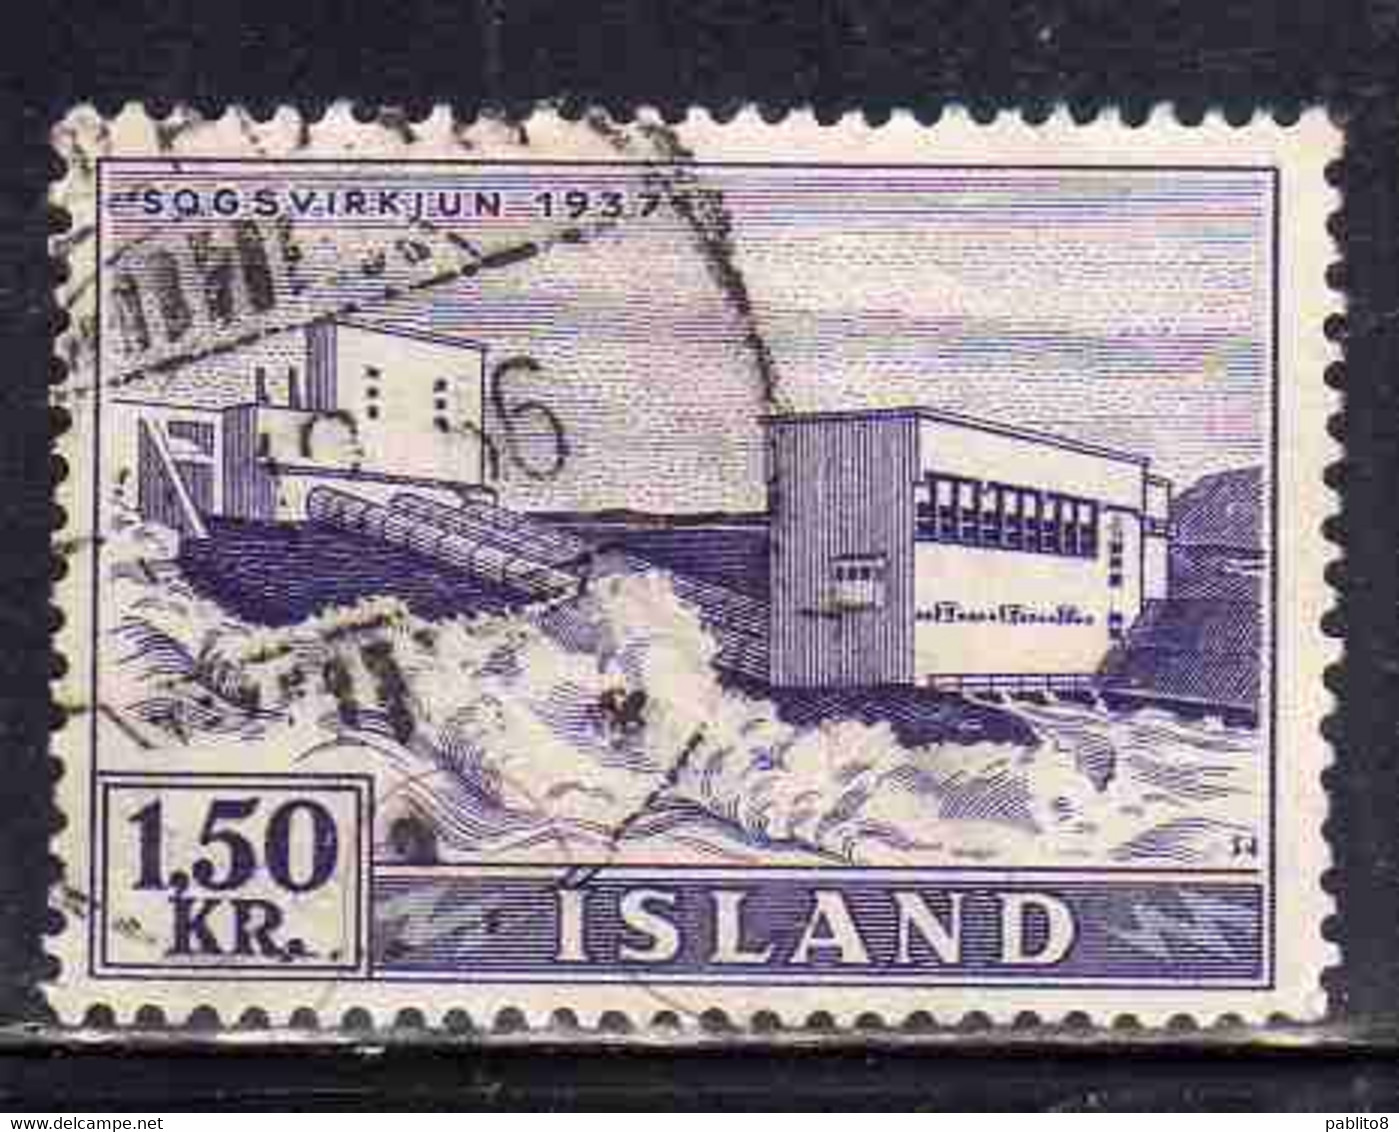 ISLANDA ICELAND ISLANDE 1956 WATERFALLS SOGS 1.50k USED USATO OBLITERE' - Luchtpost